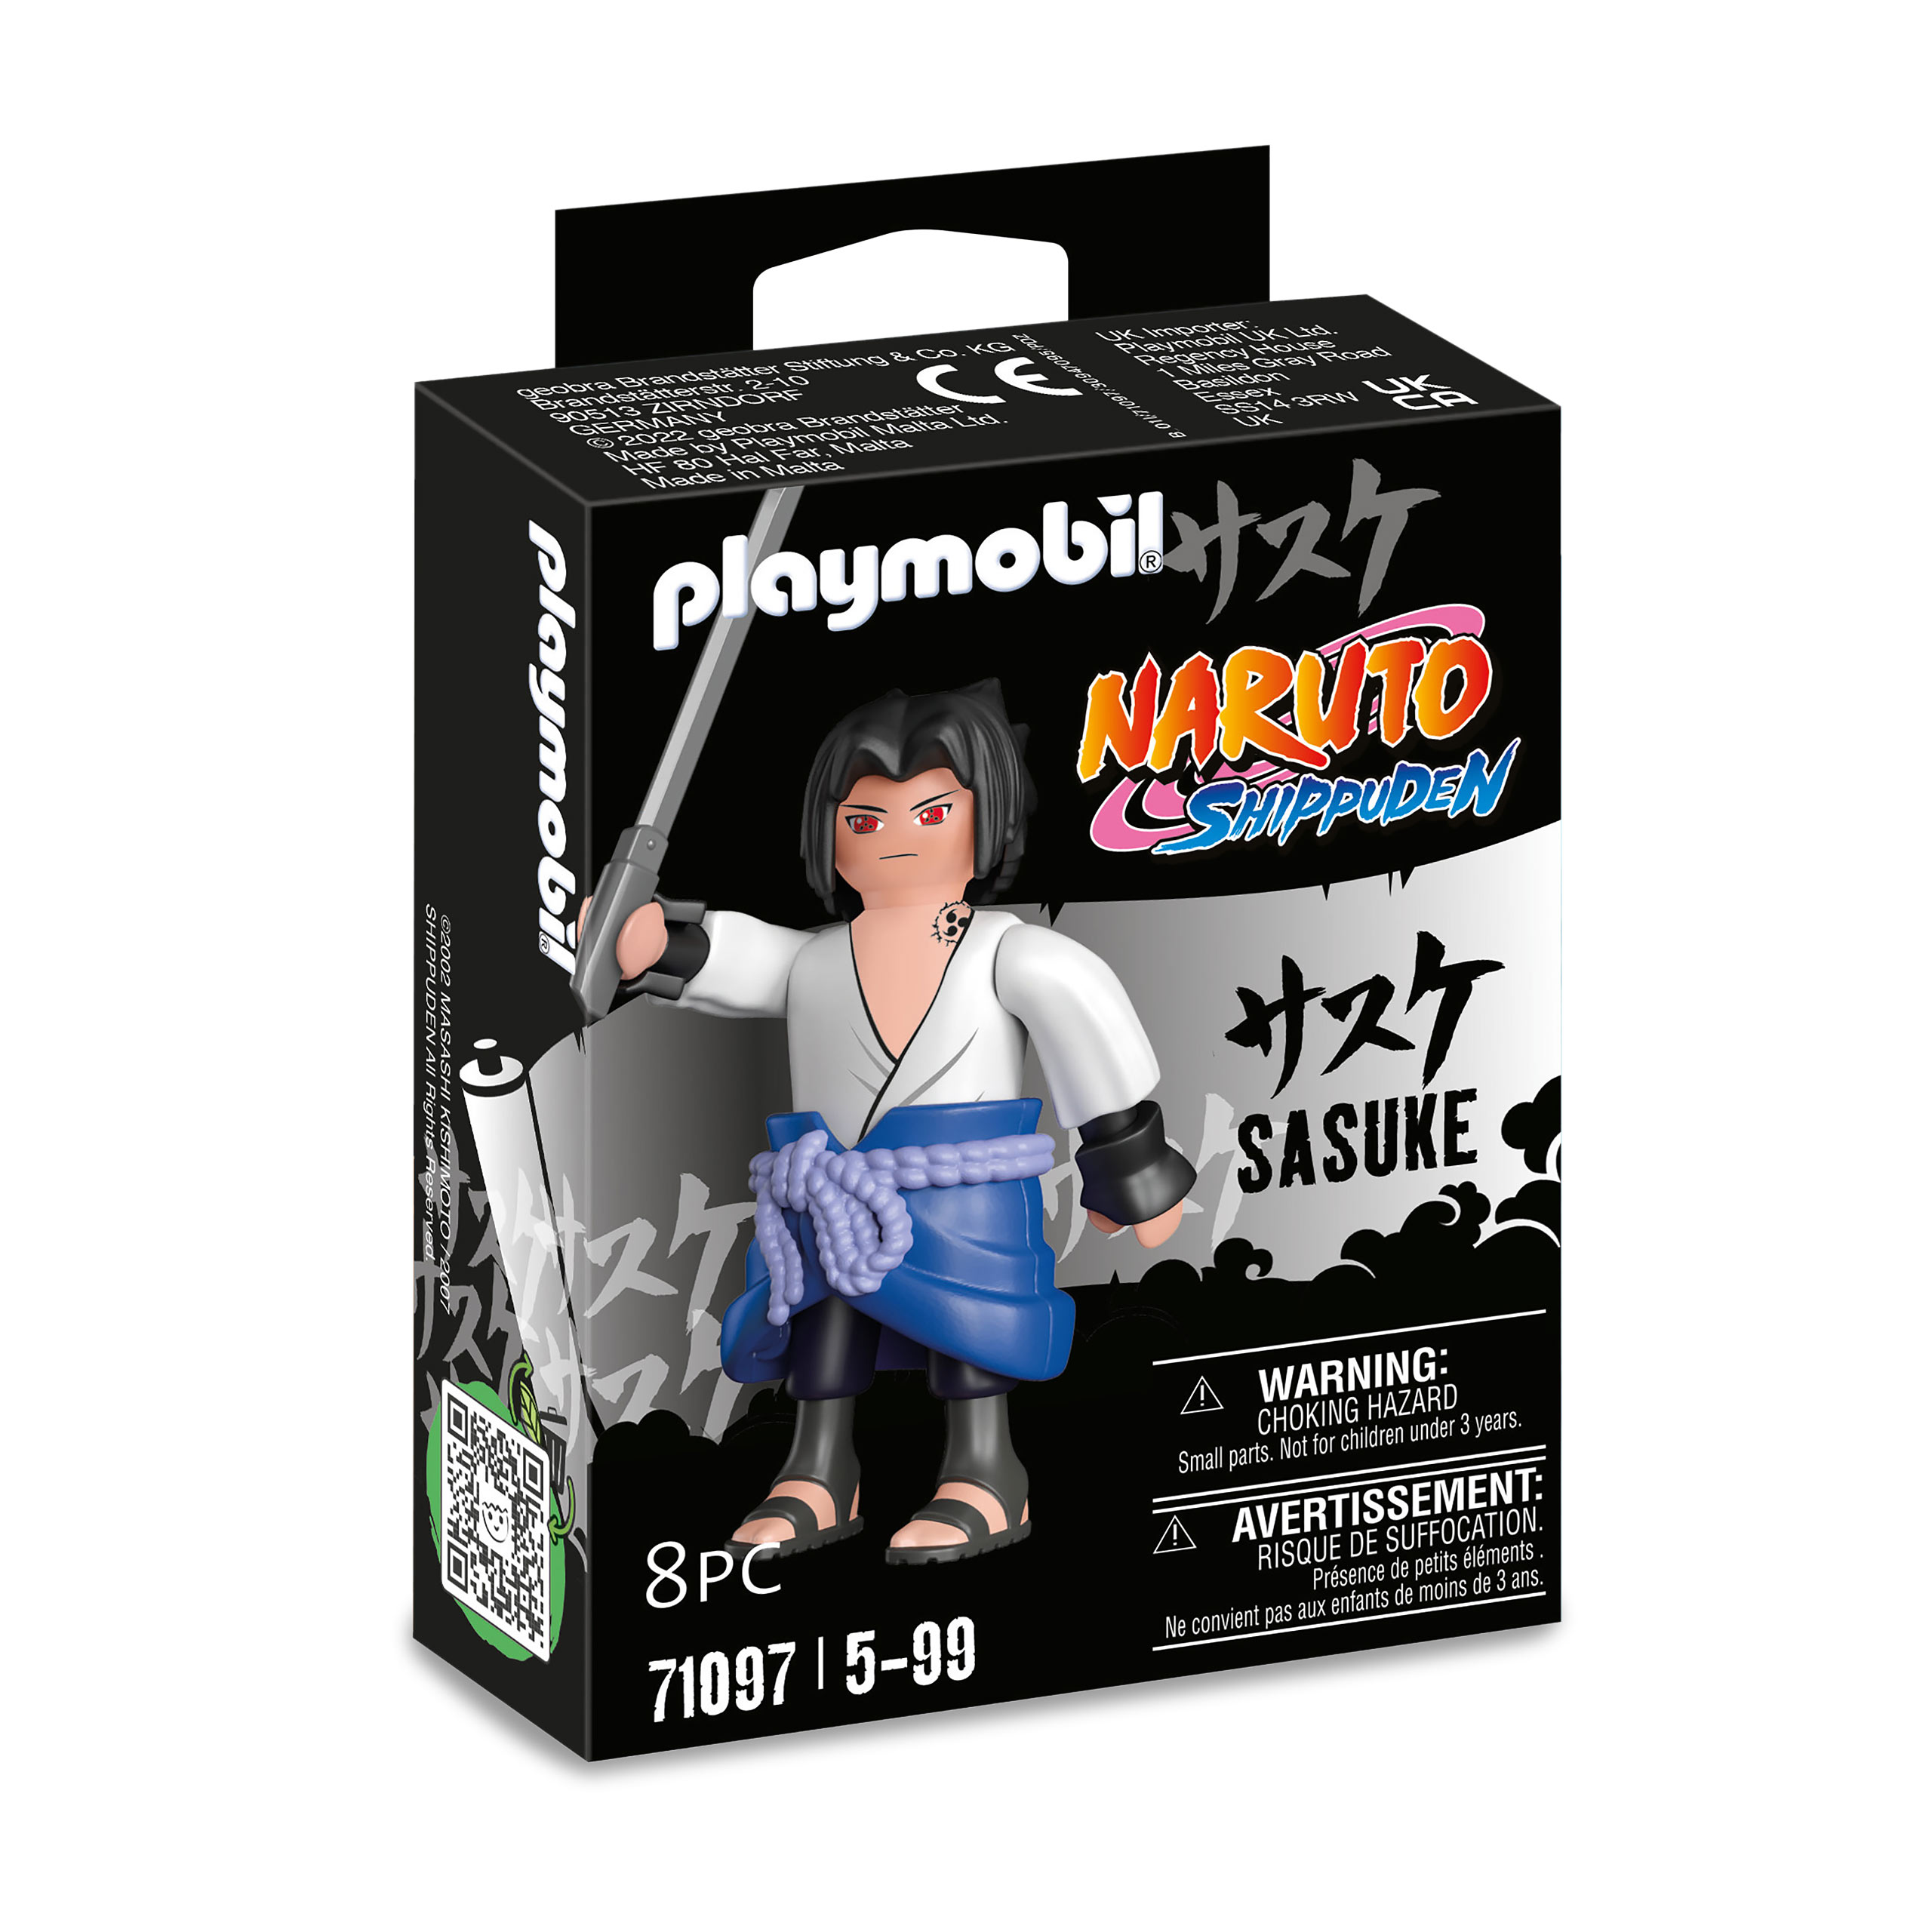 Naruto - Sasuke Playmobil Figure